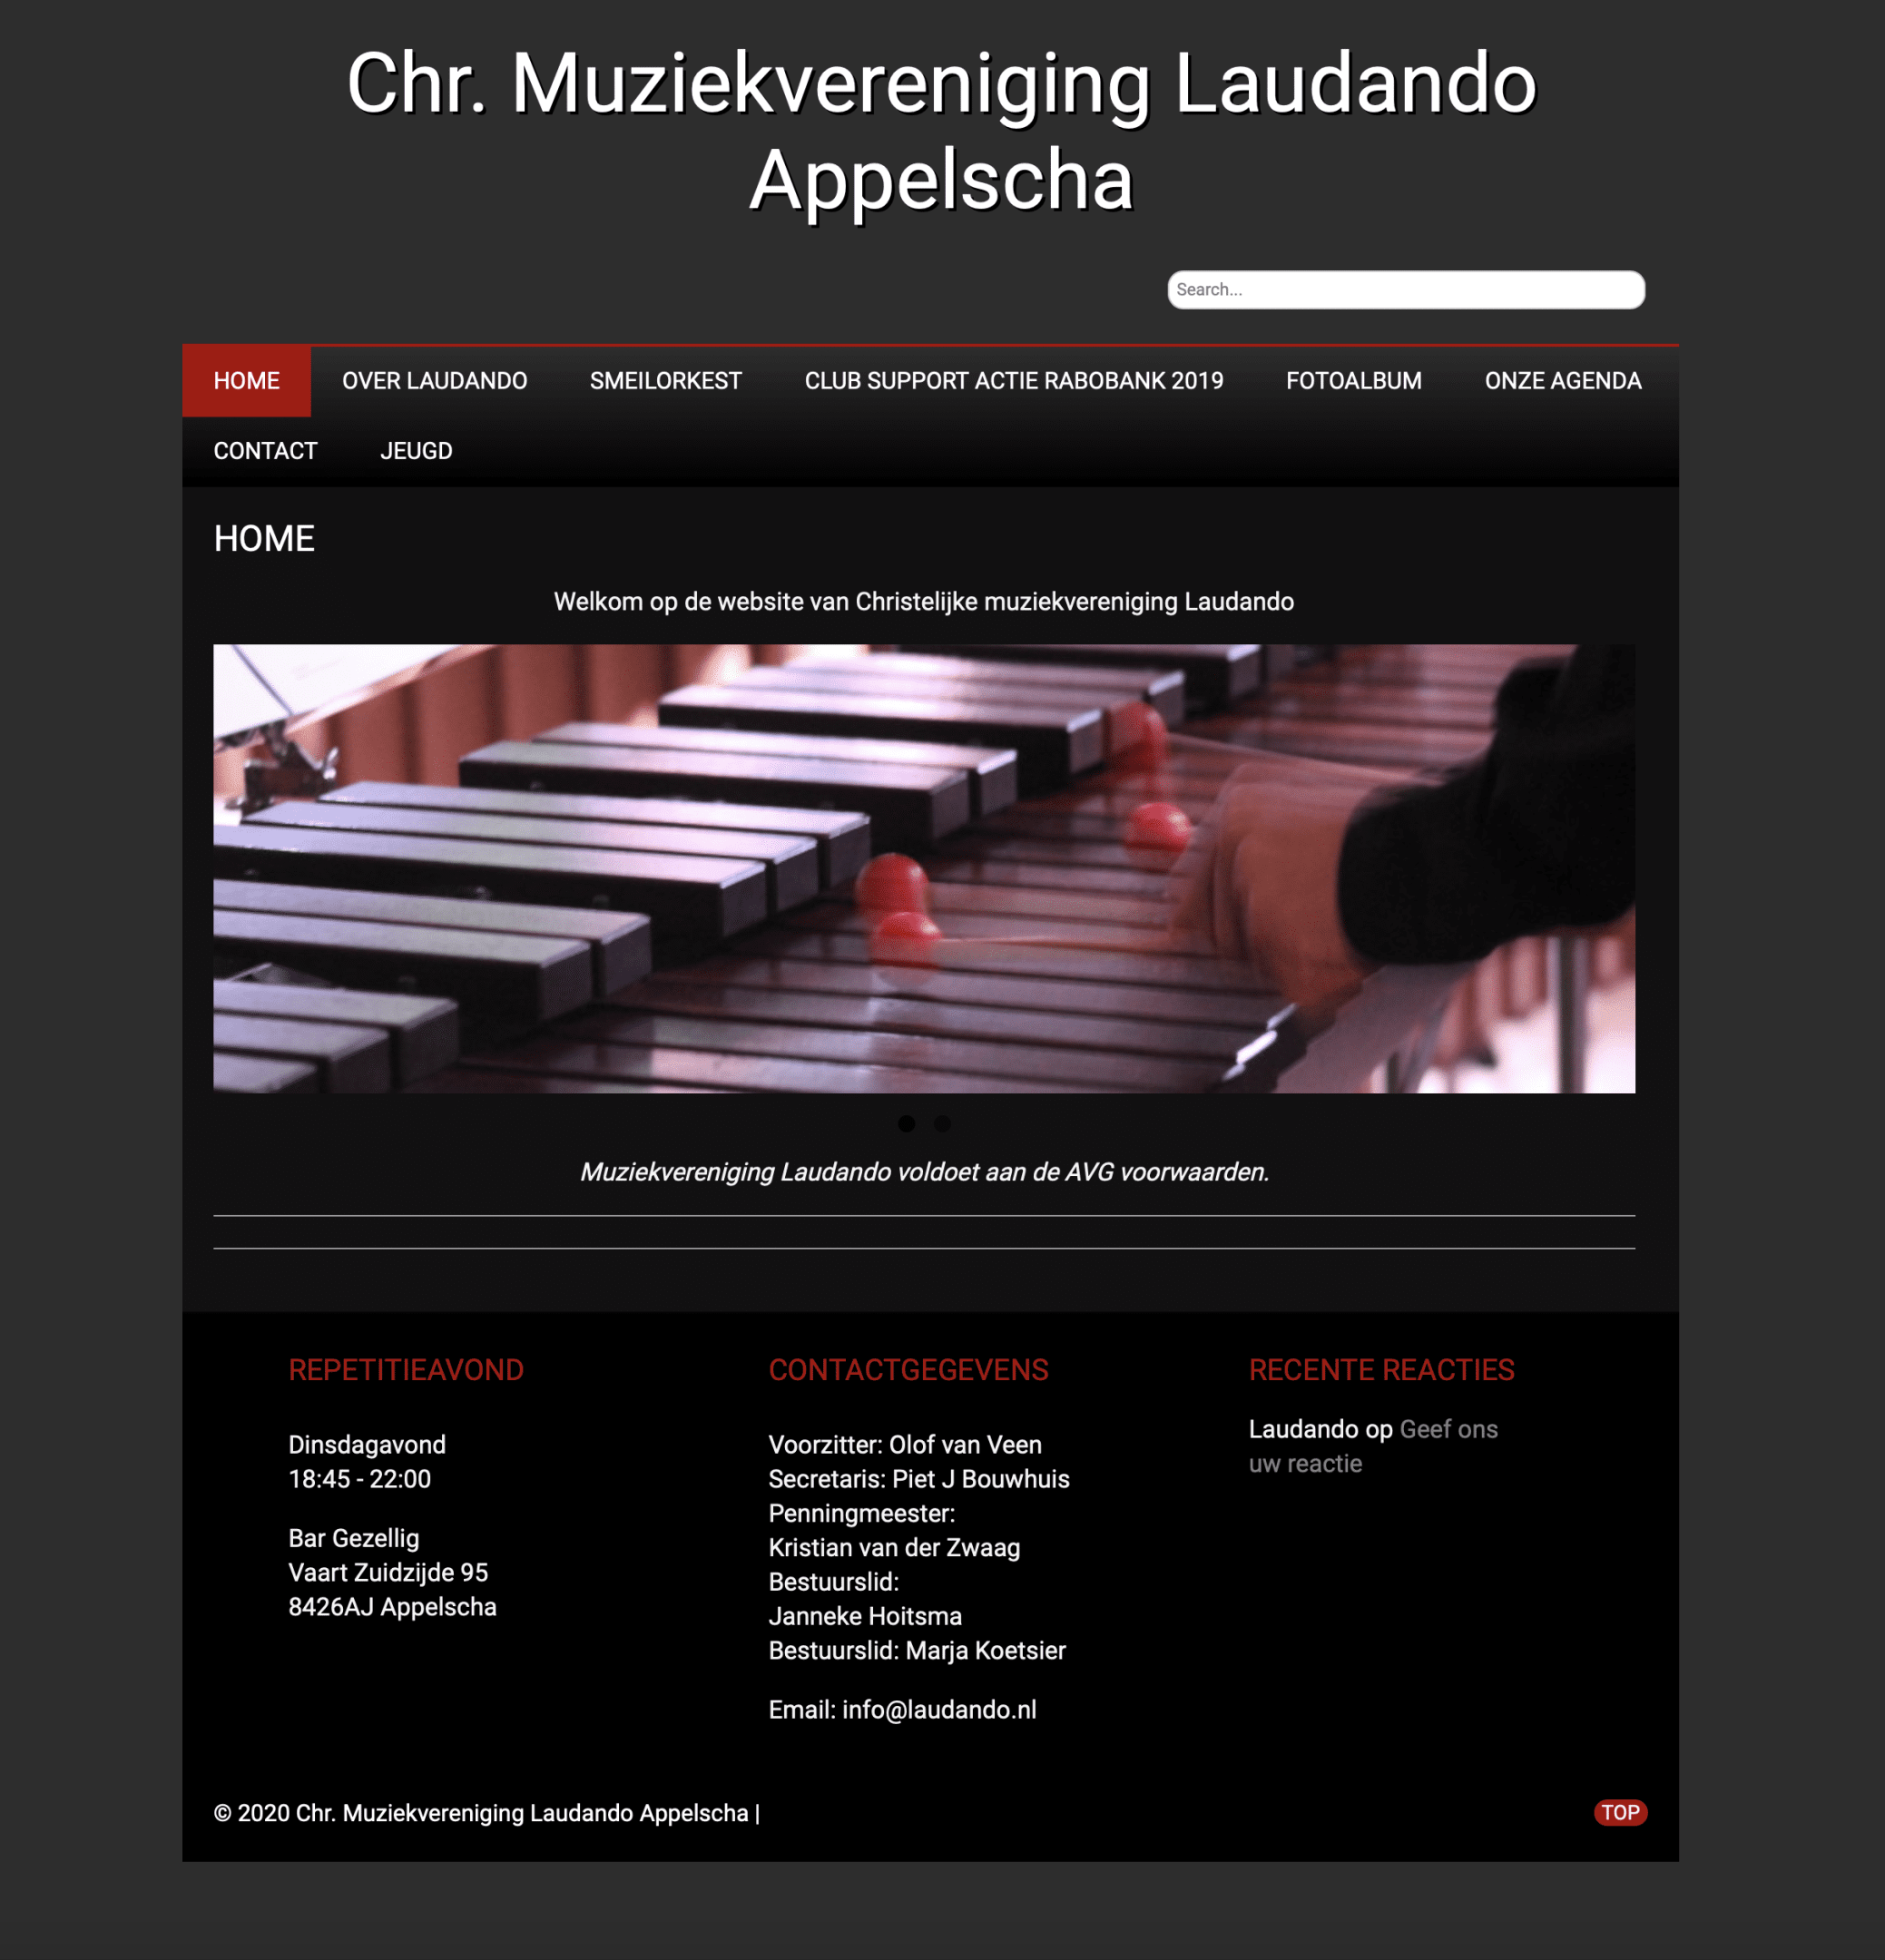 www.laudando.nl